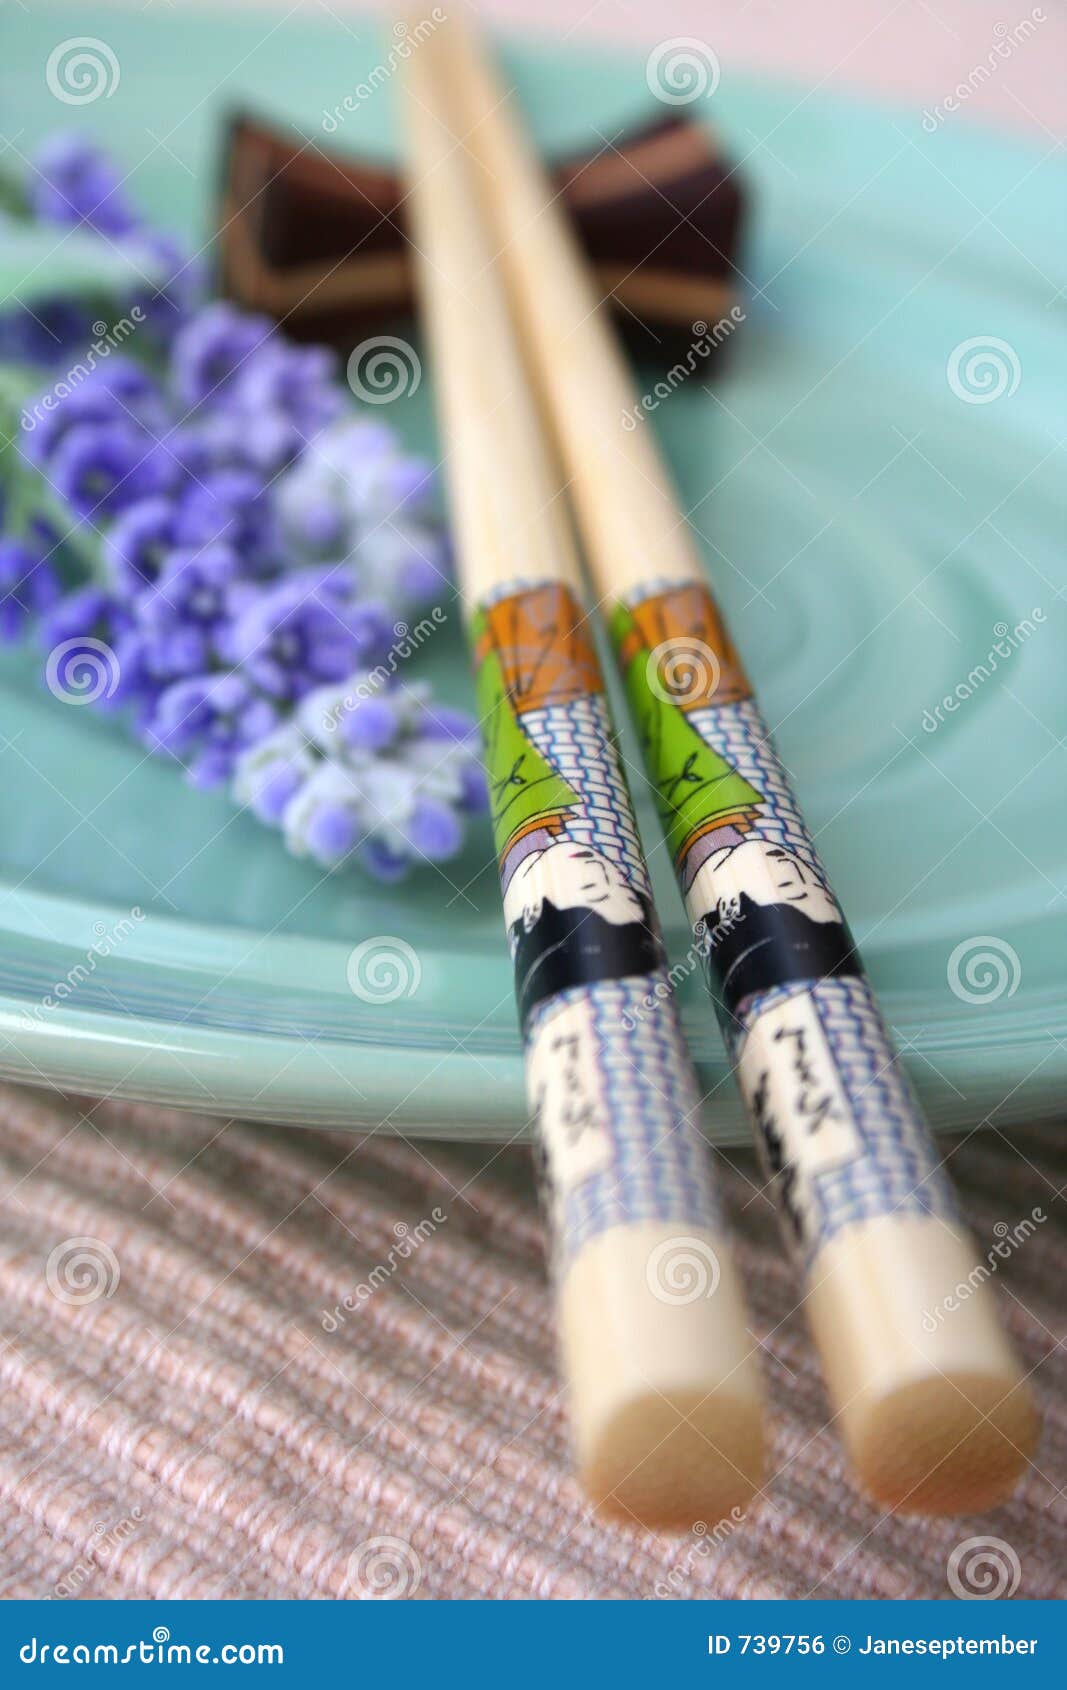 chopstick, plate & lavender